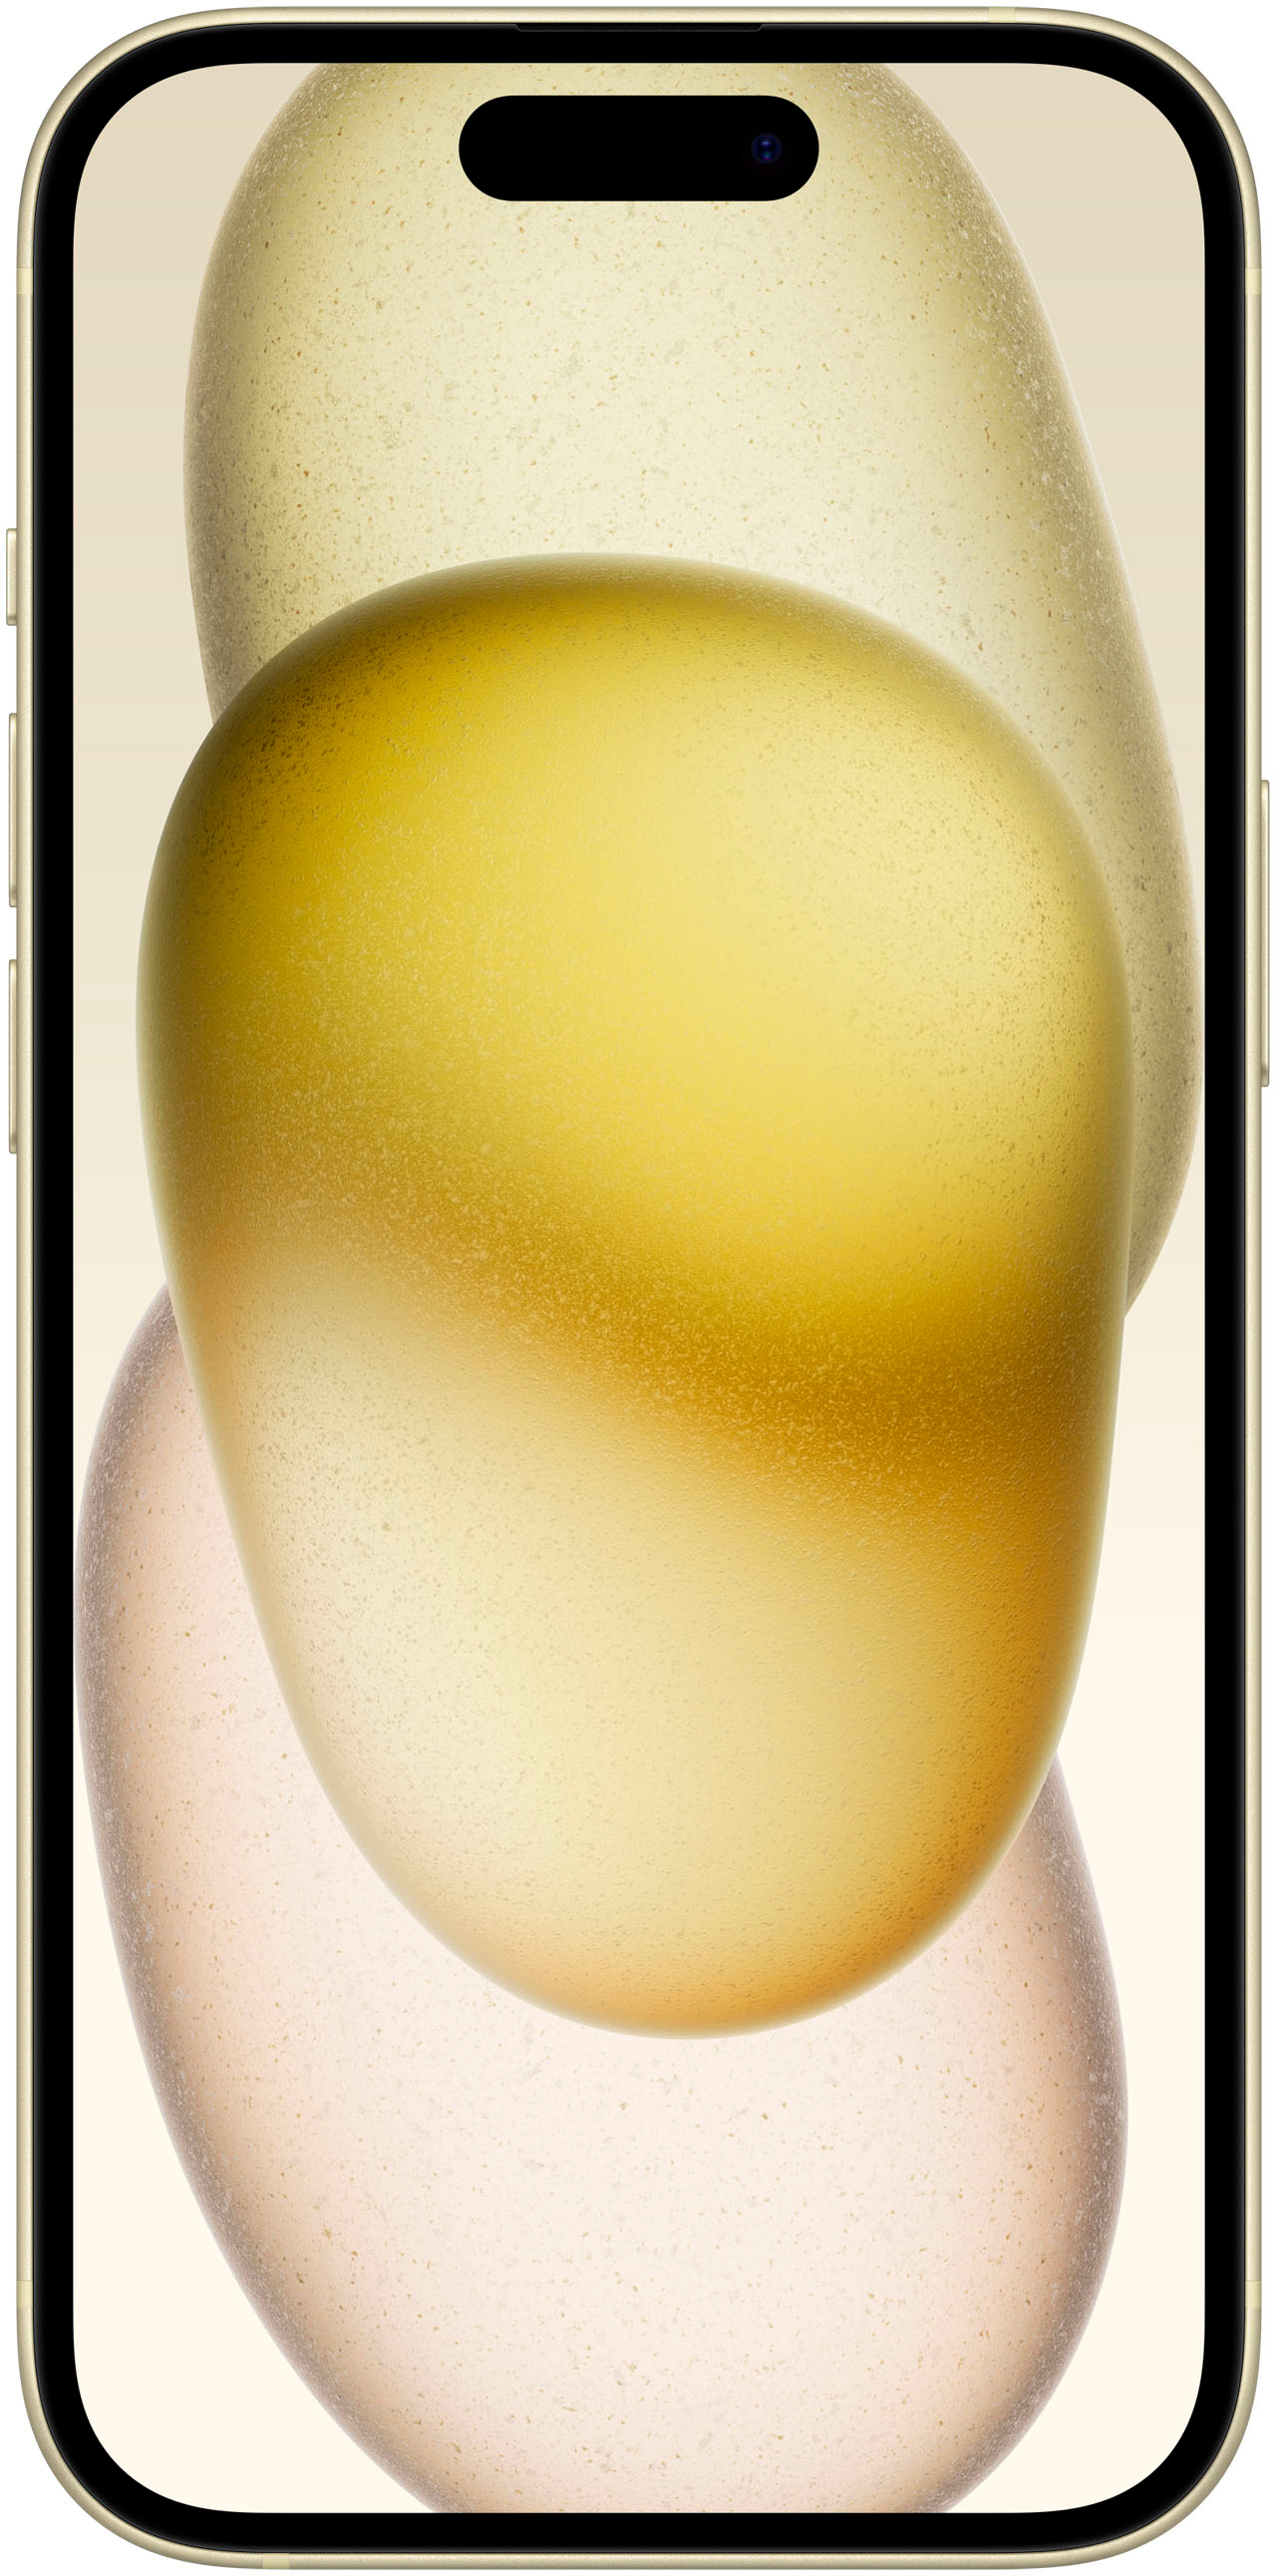 Buy iPhone 15 128GB Yellow - Apple